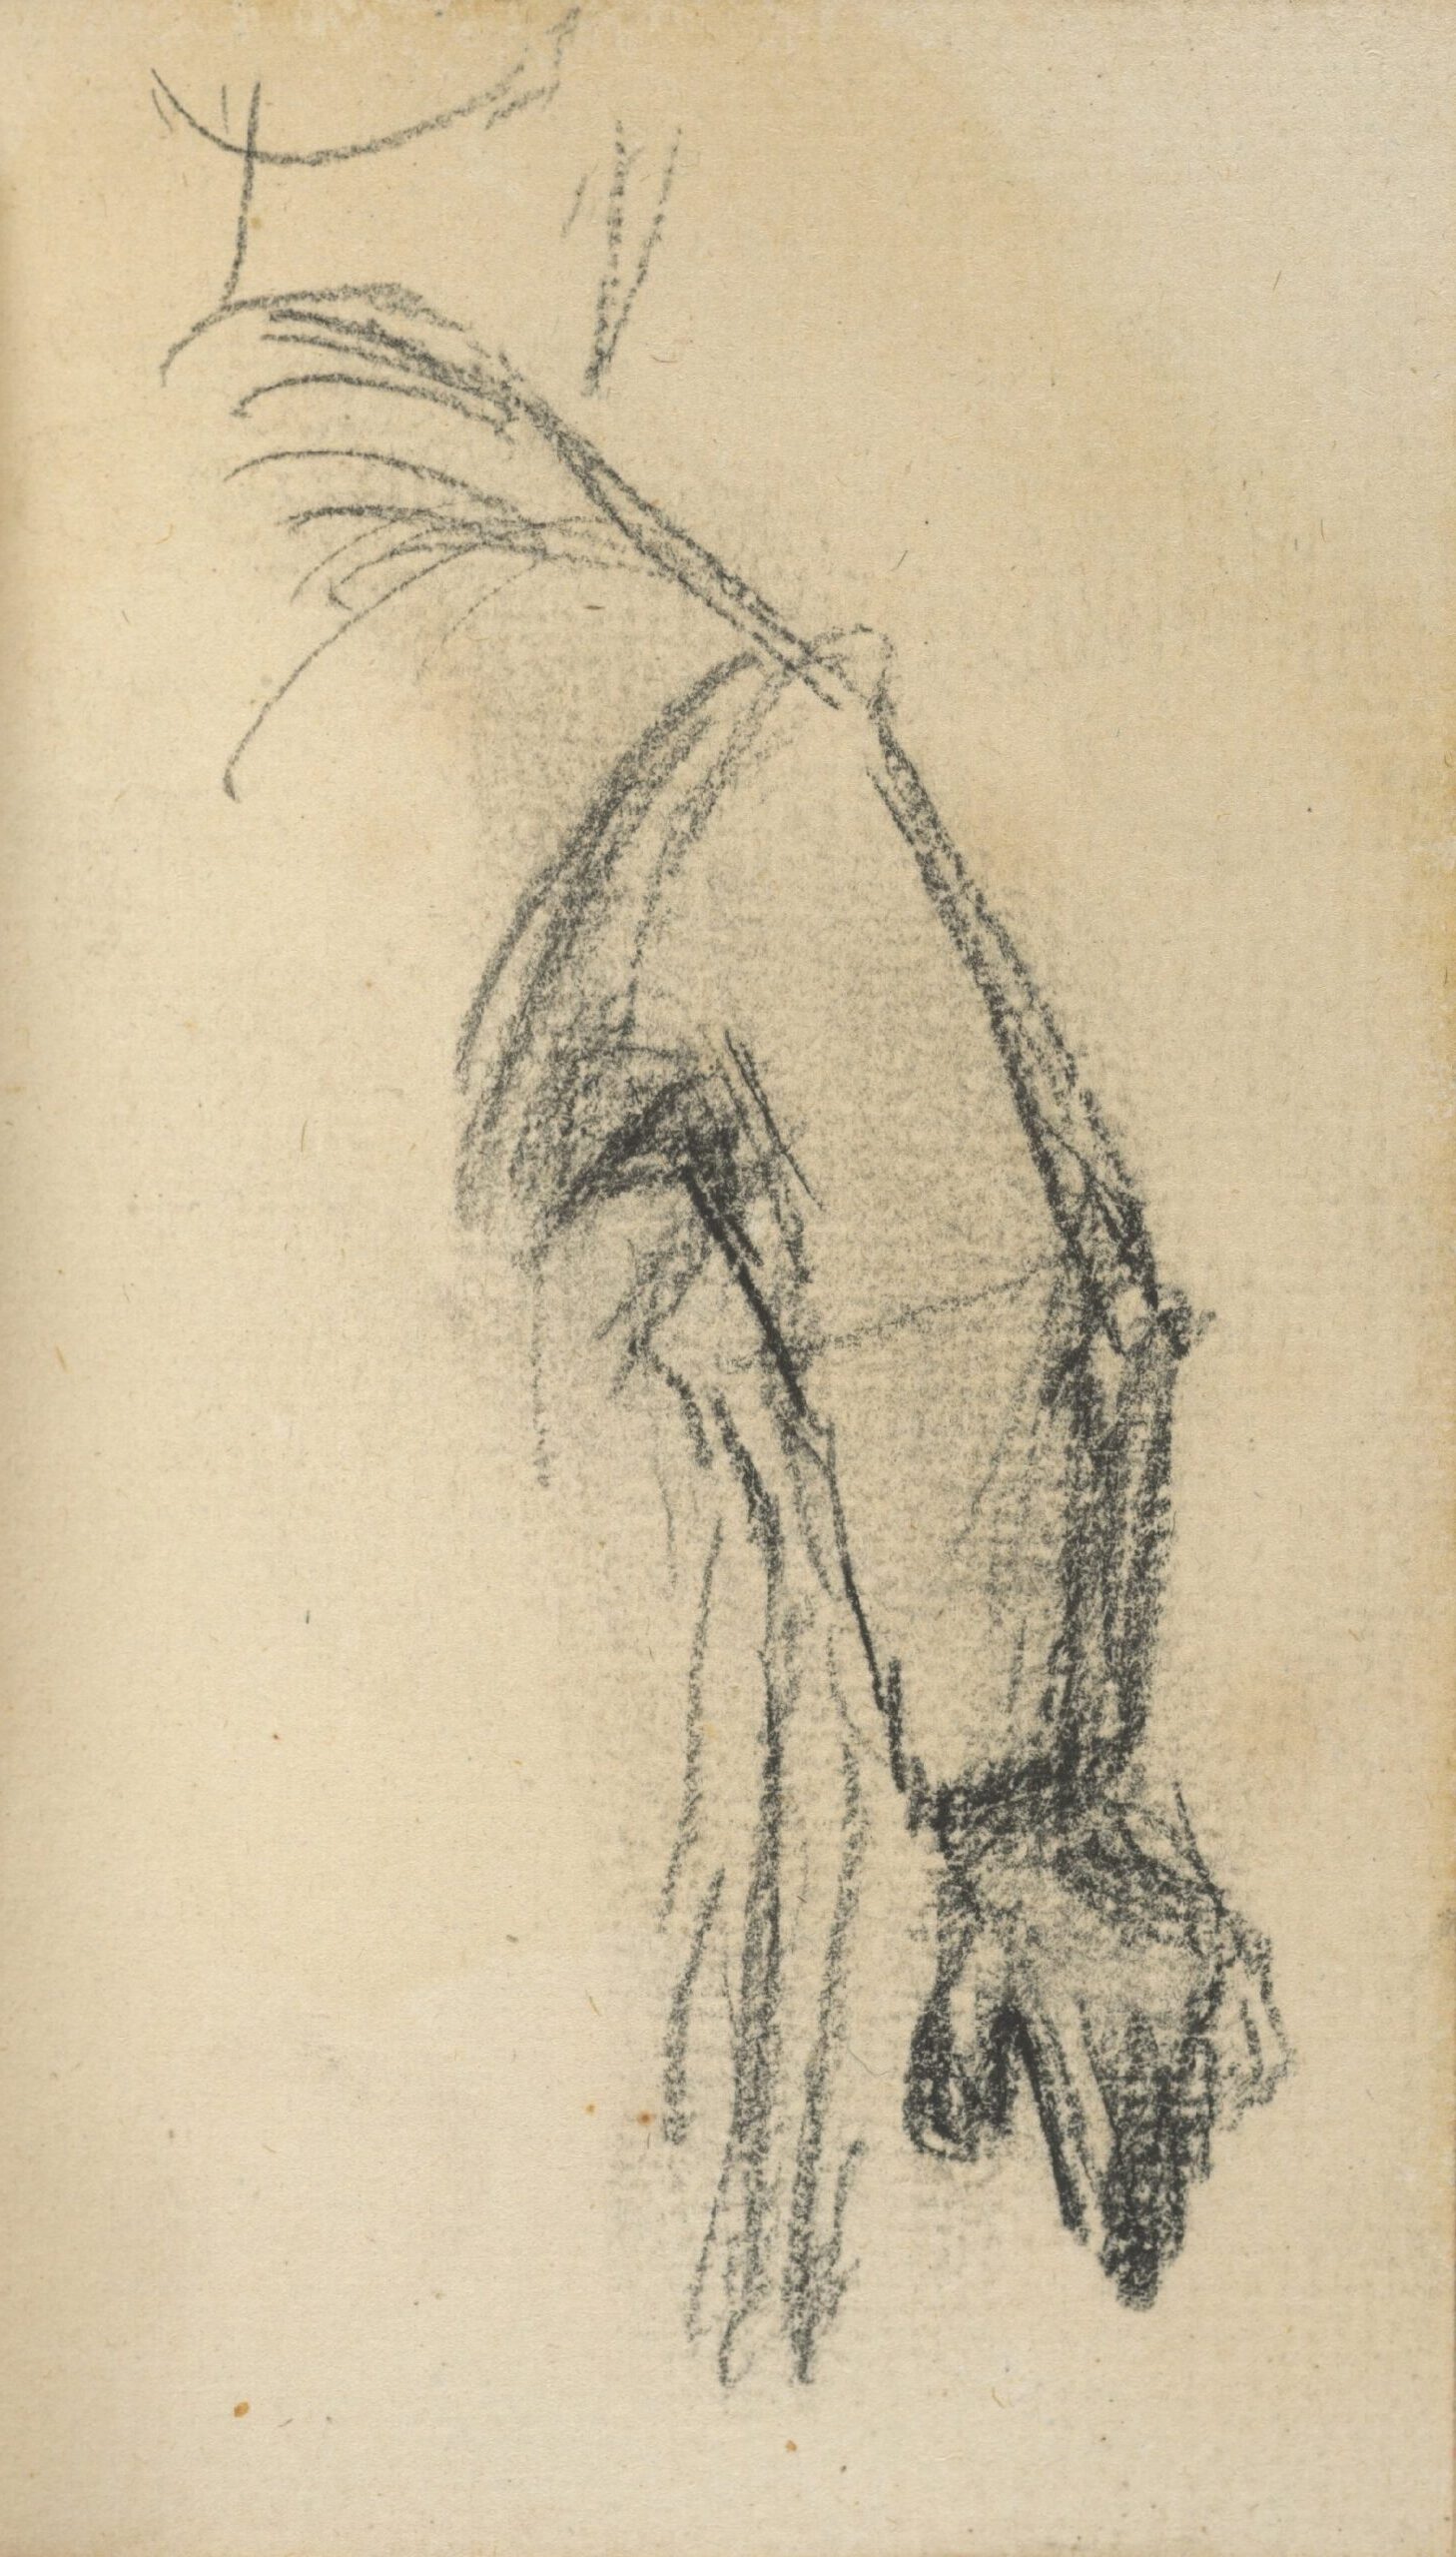 Arm Vincent van Gogh (1853 - 1890), Nuenen, november 1884-september 1885